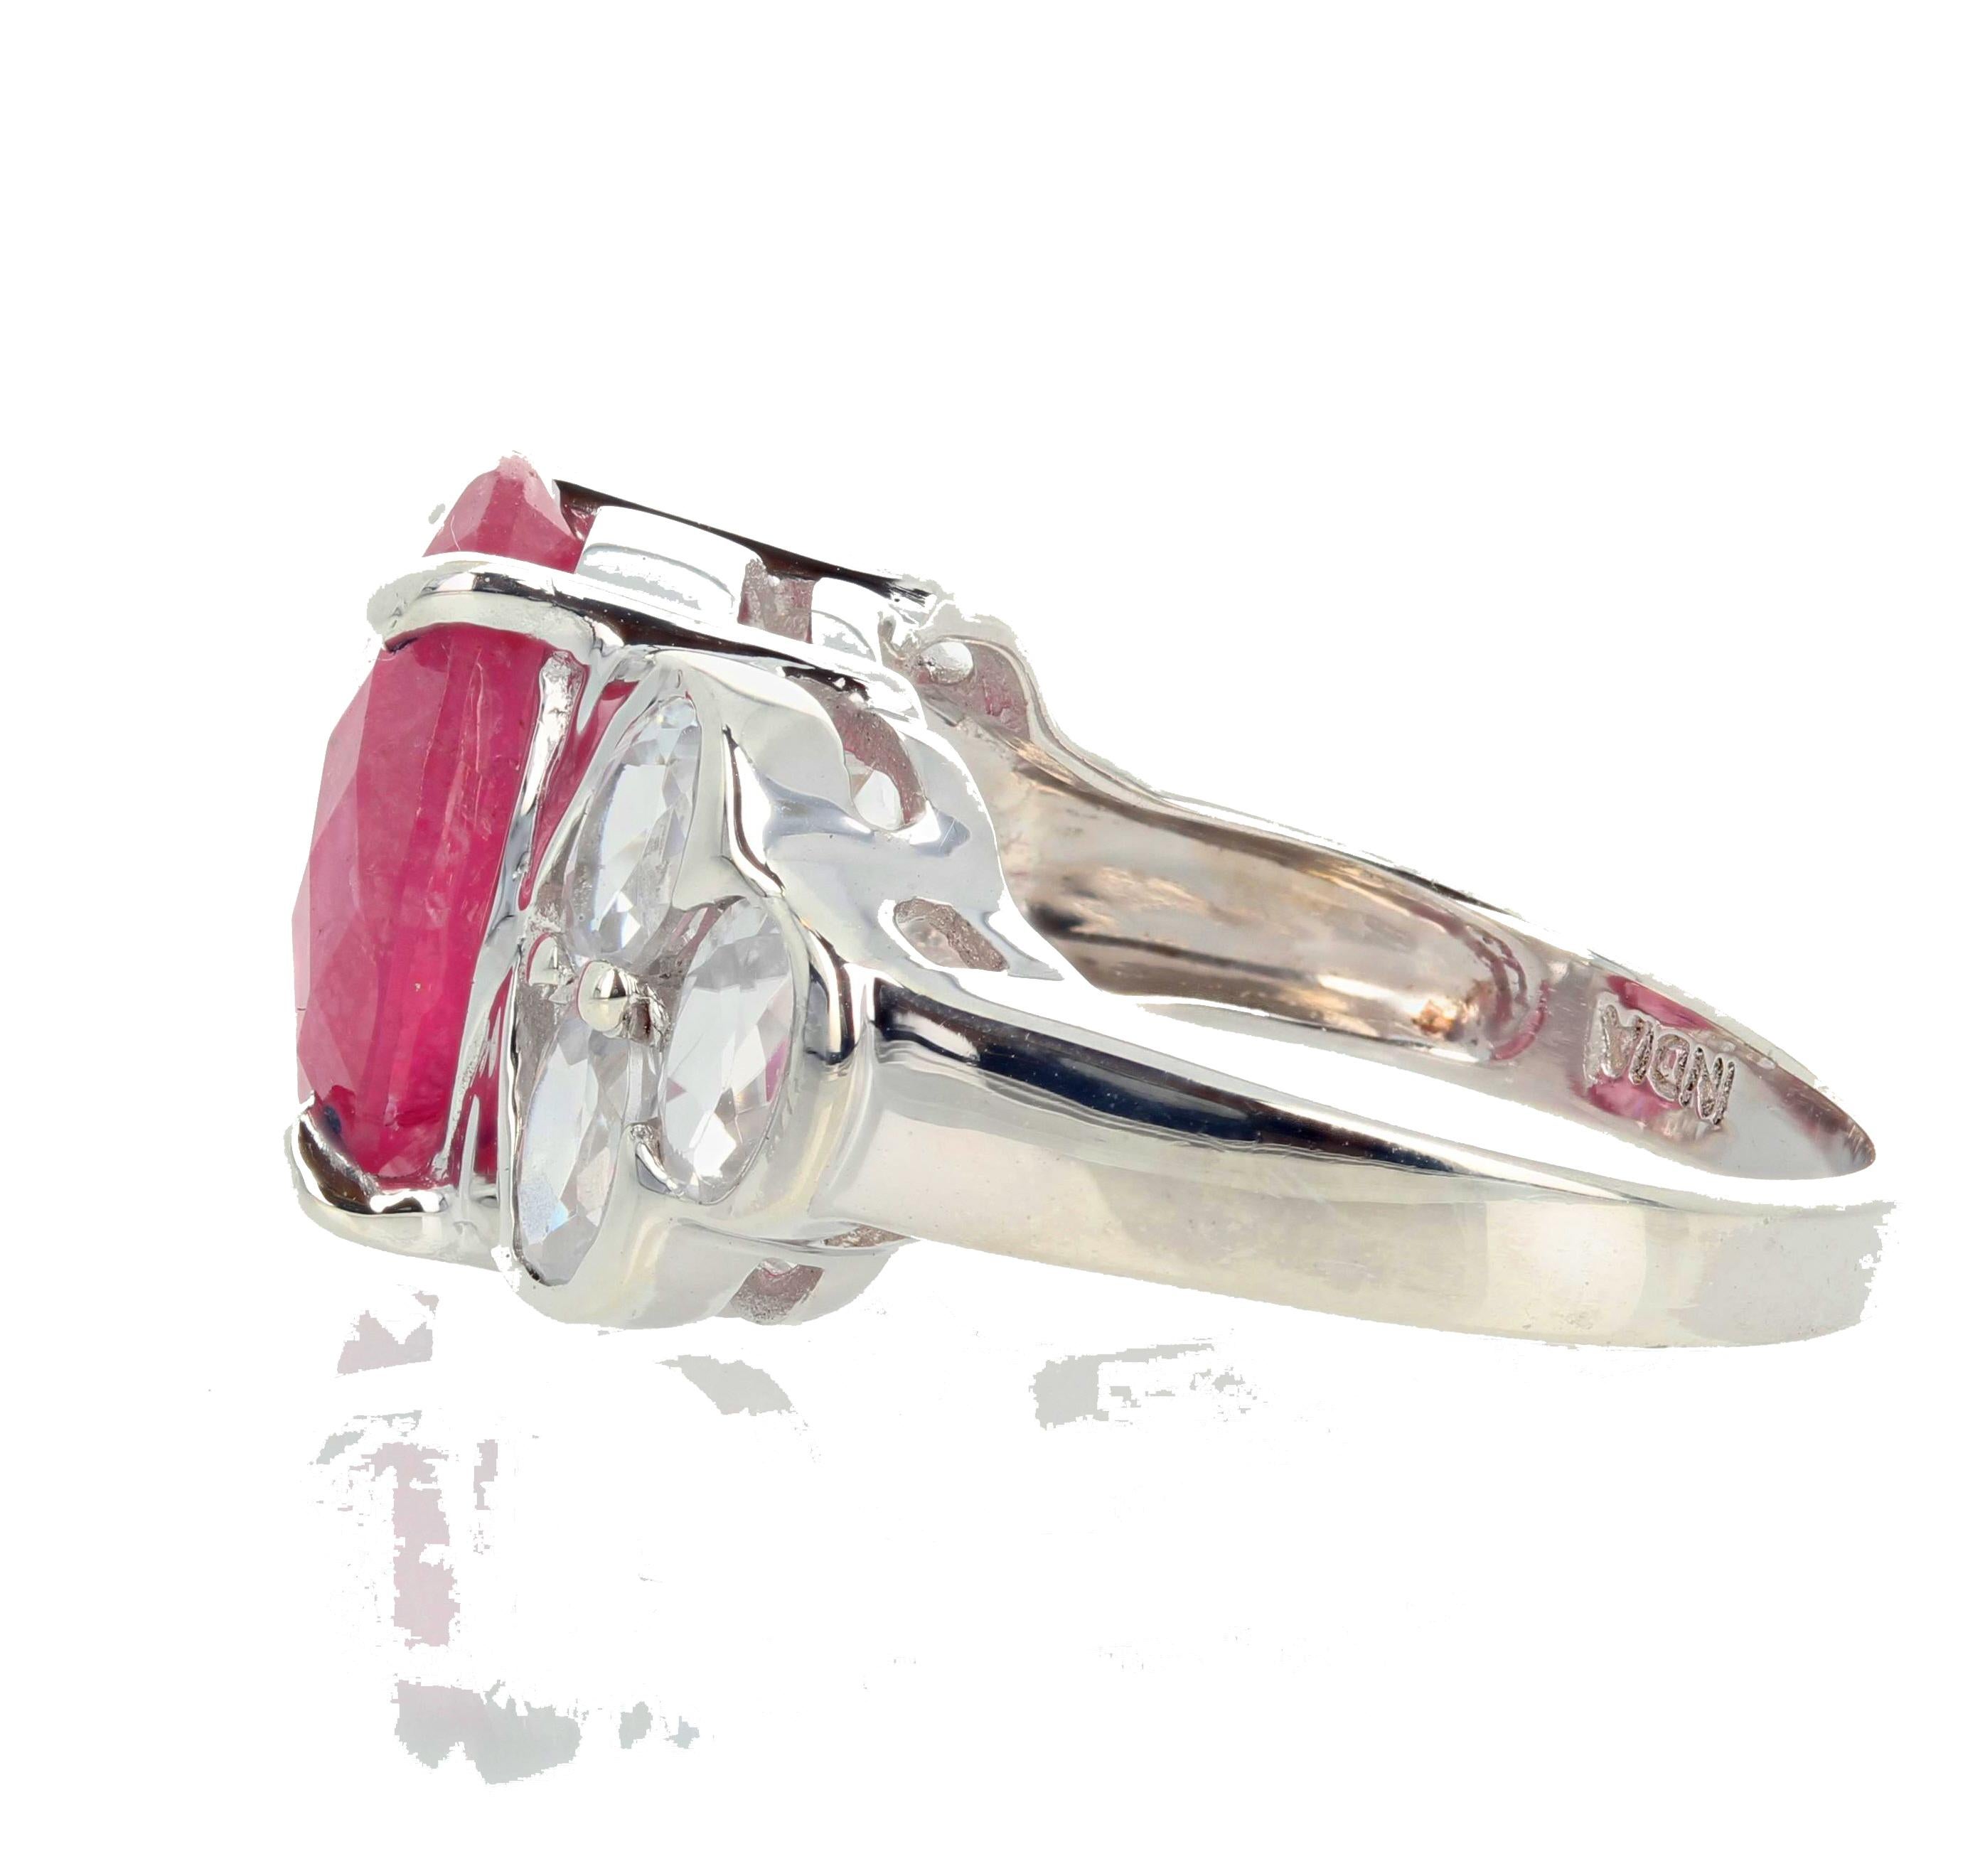 Oval Cut AJD Beautiful Bright 5.08Ct Pink Tourmaline & White Topaz Ring 